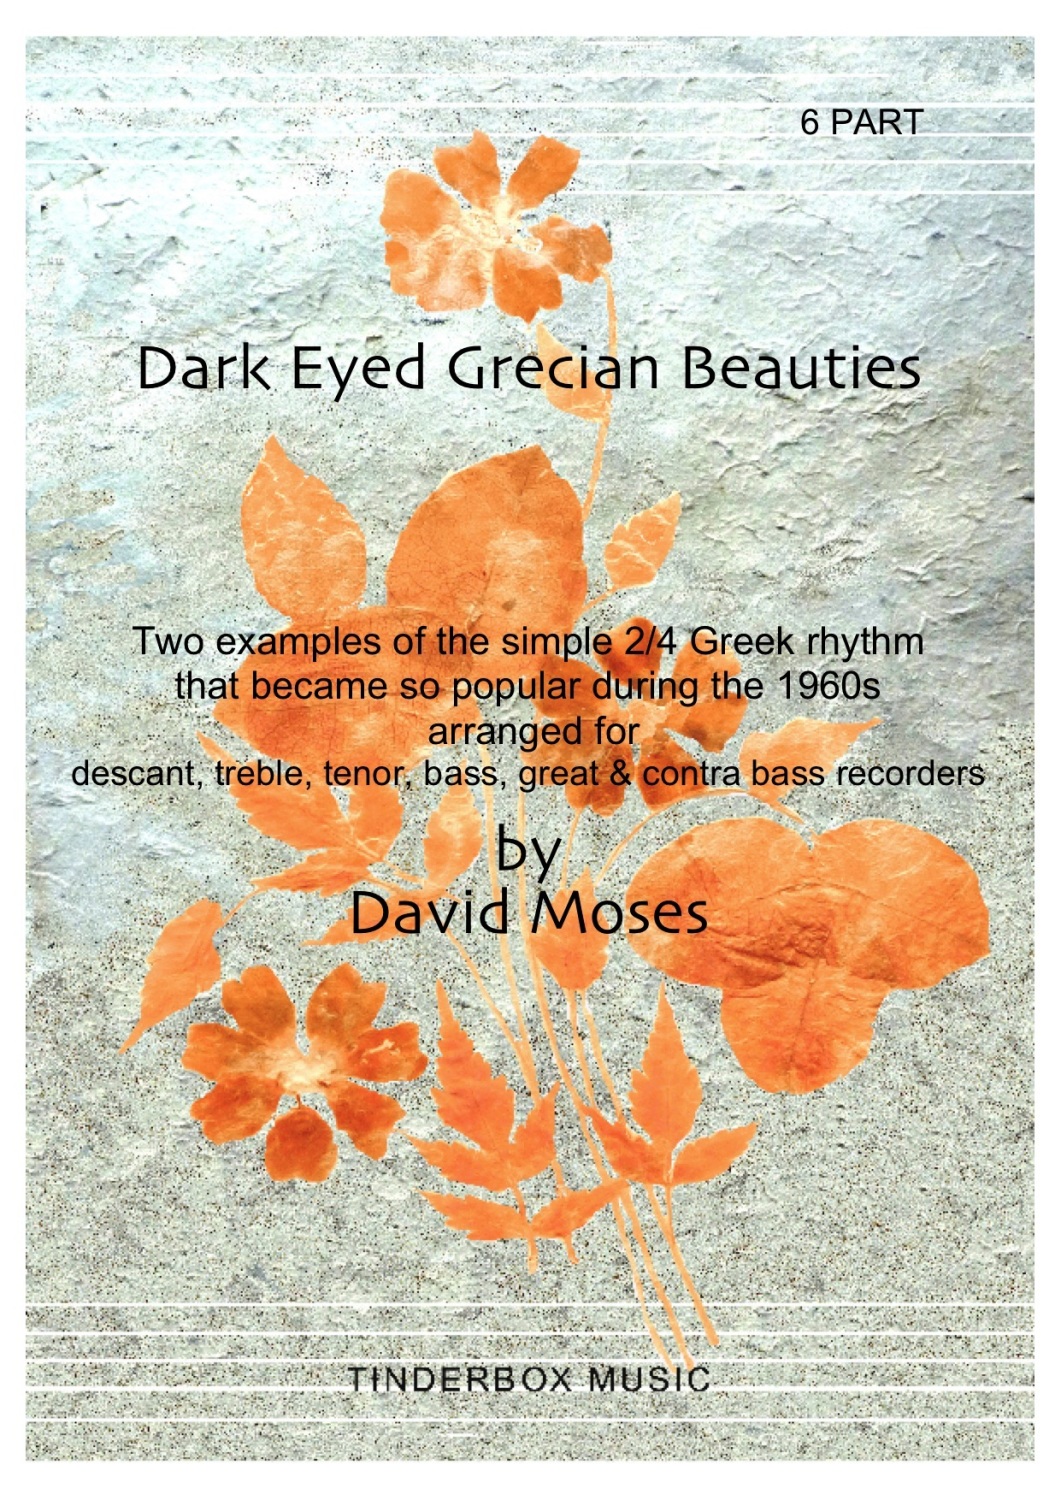 Dark Eyed Grecian Beauties   6 part